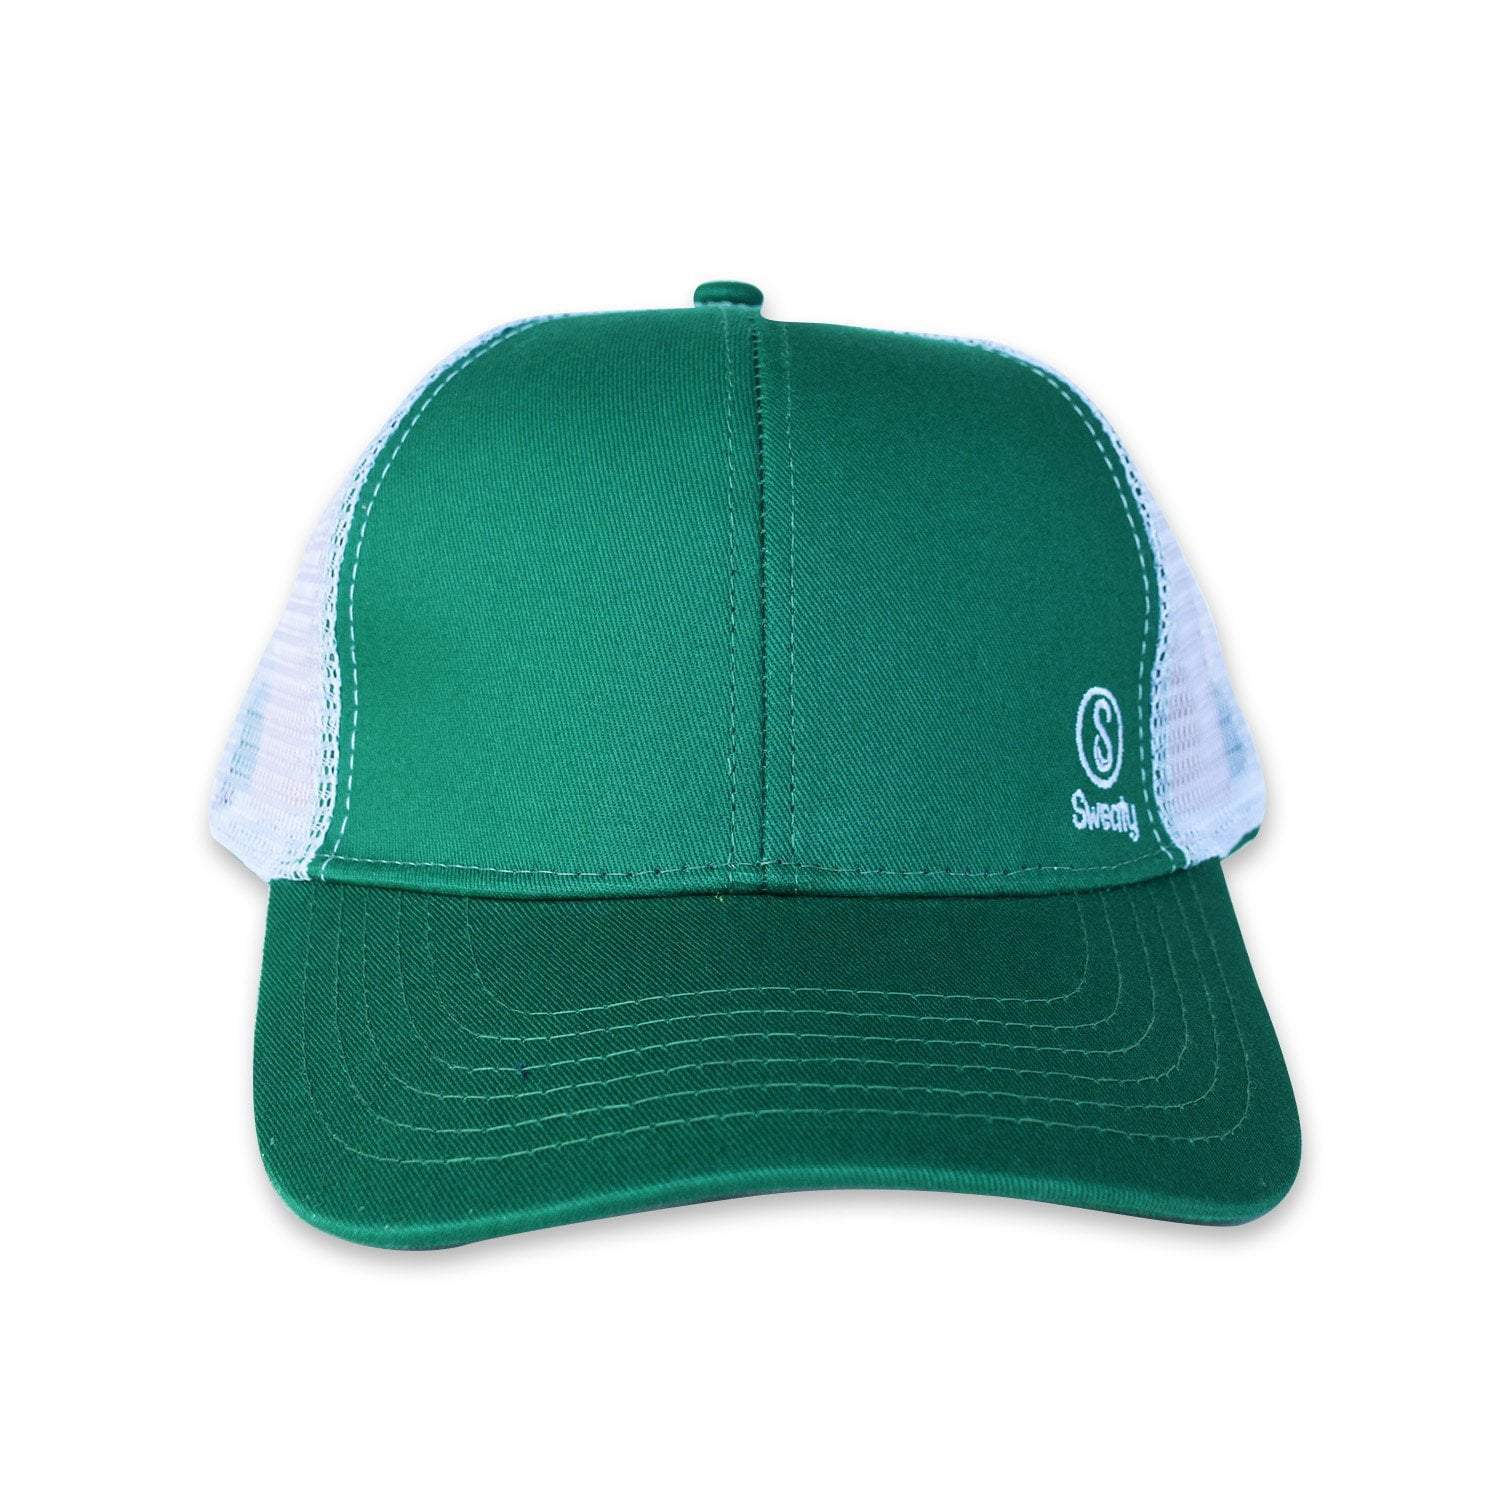 Hats, Baseball Hat, Green, White